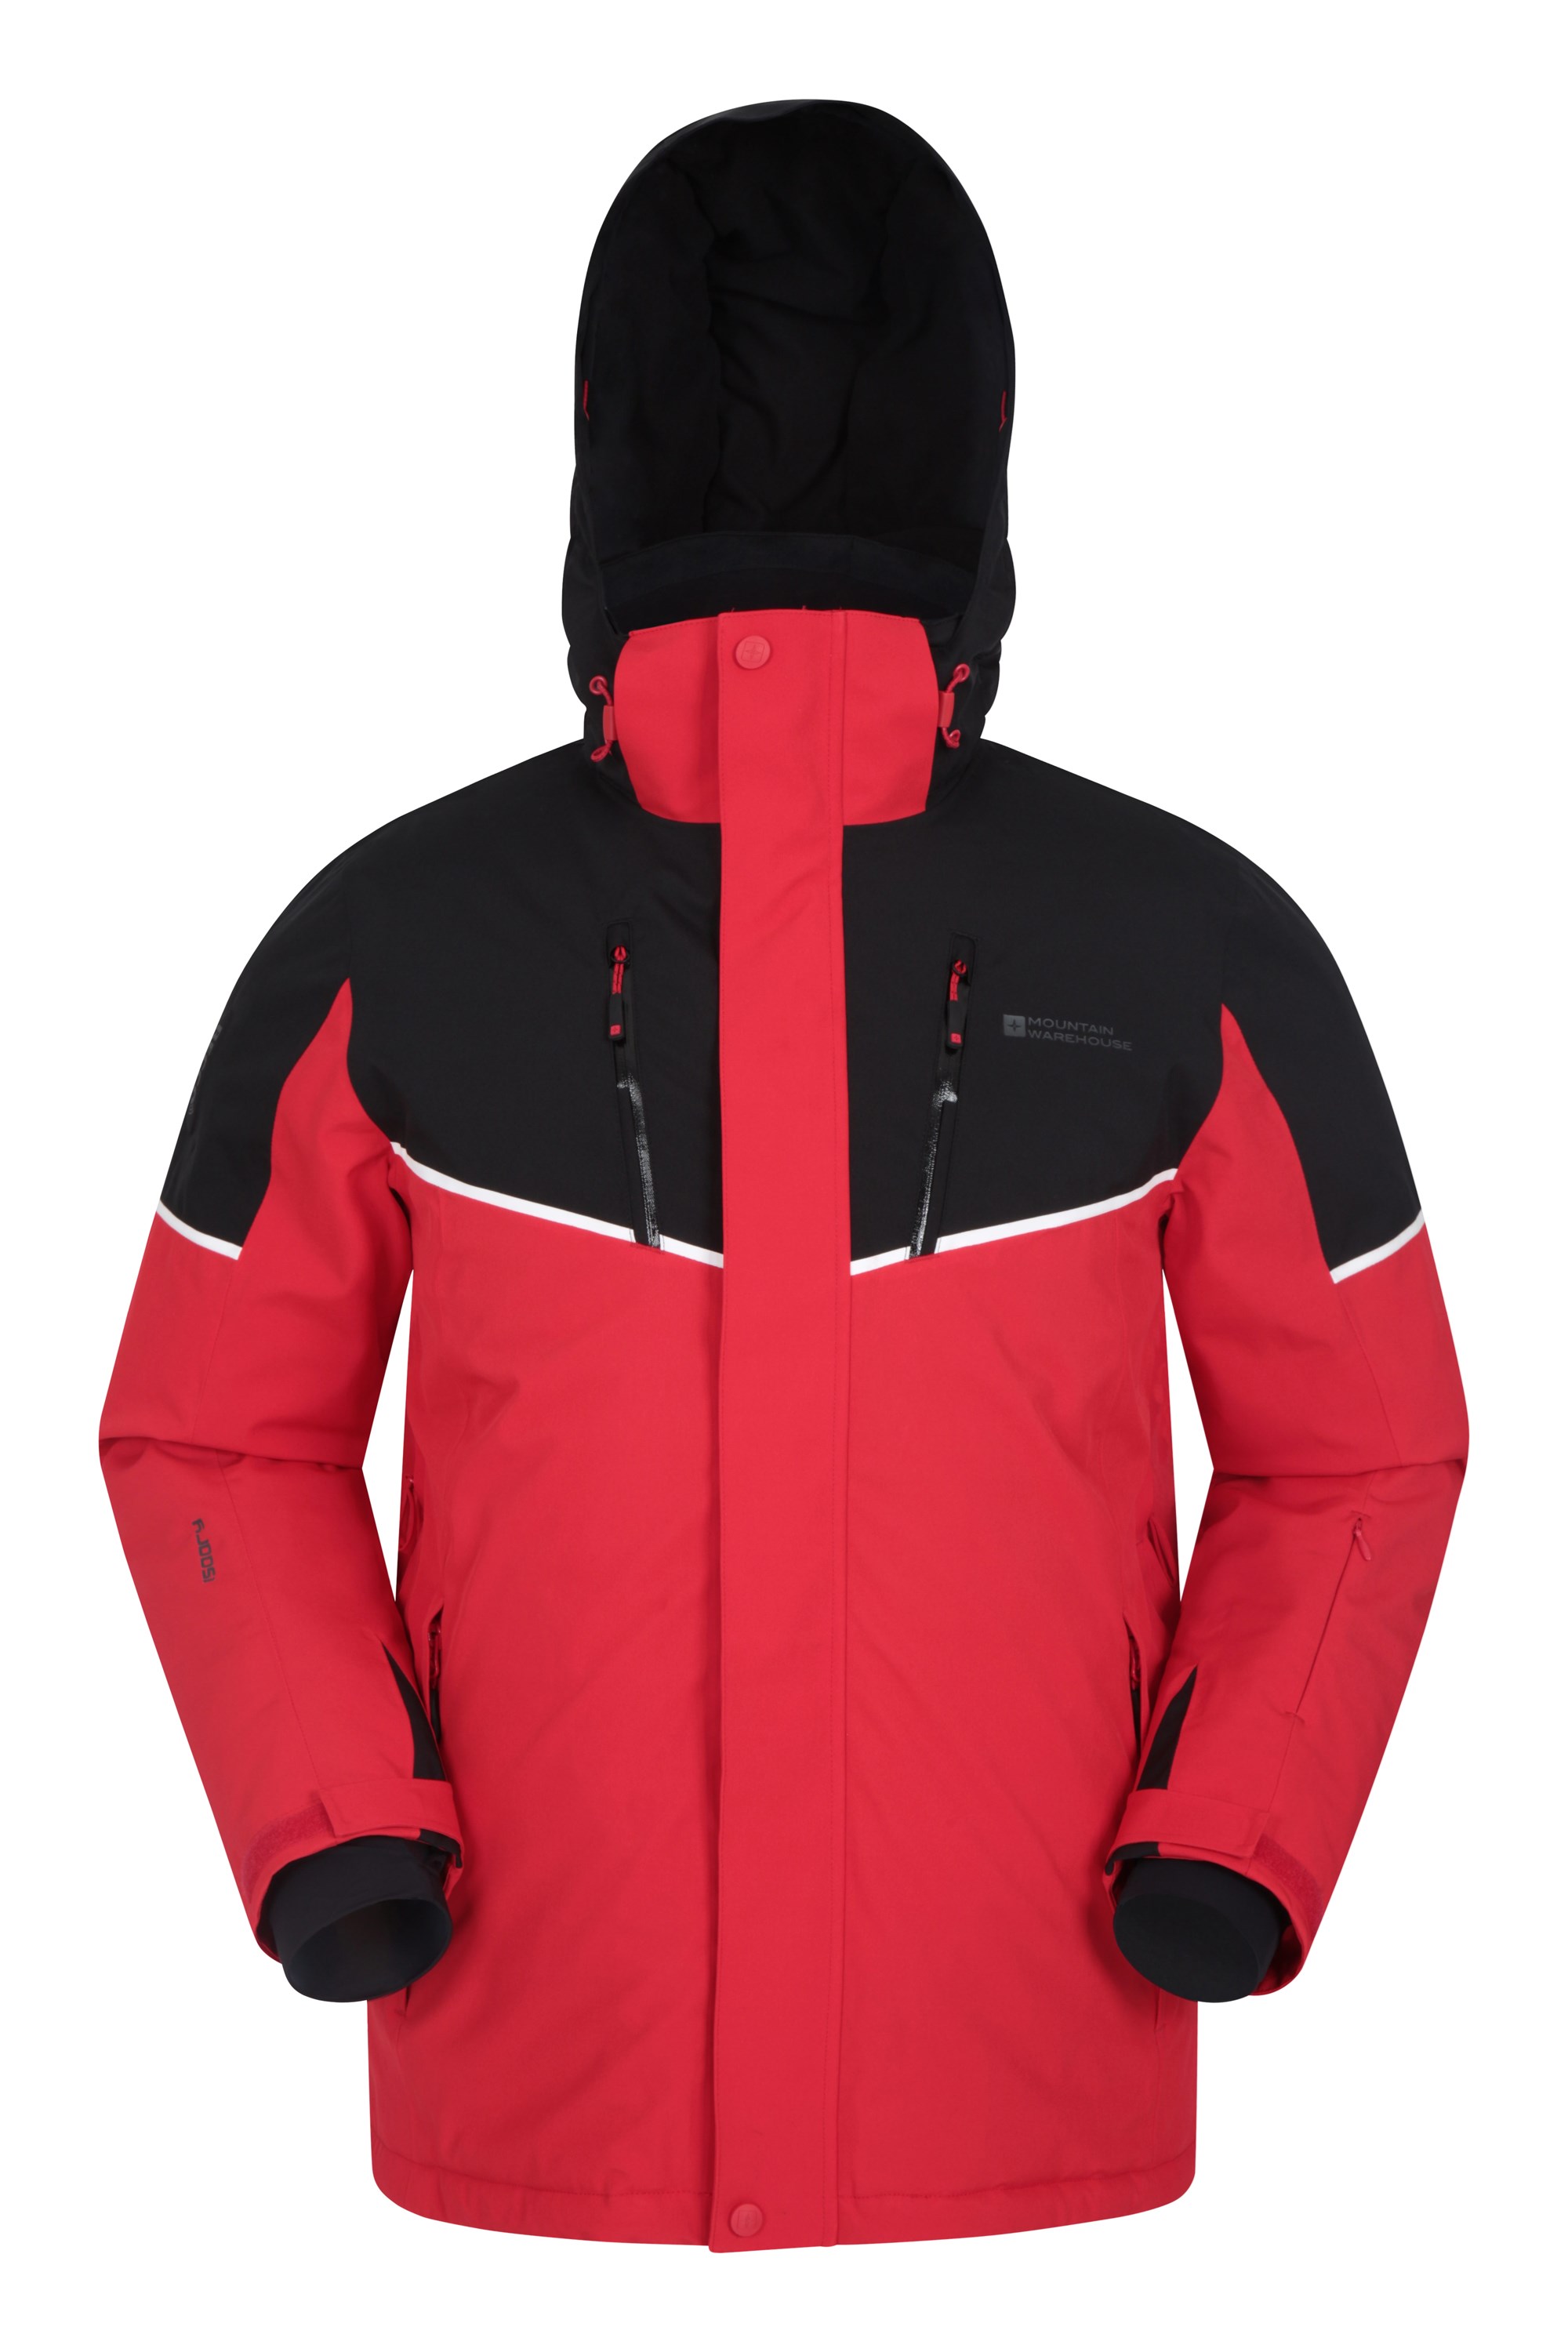 Mountain Warehouse Galactic Extreme Mens Ski Jacket Red